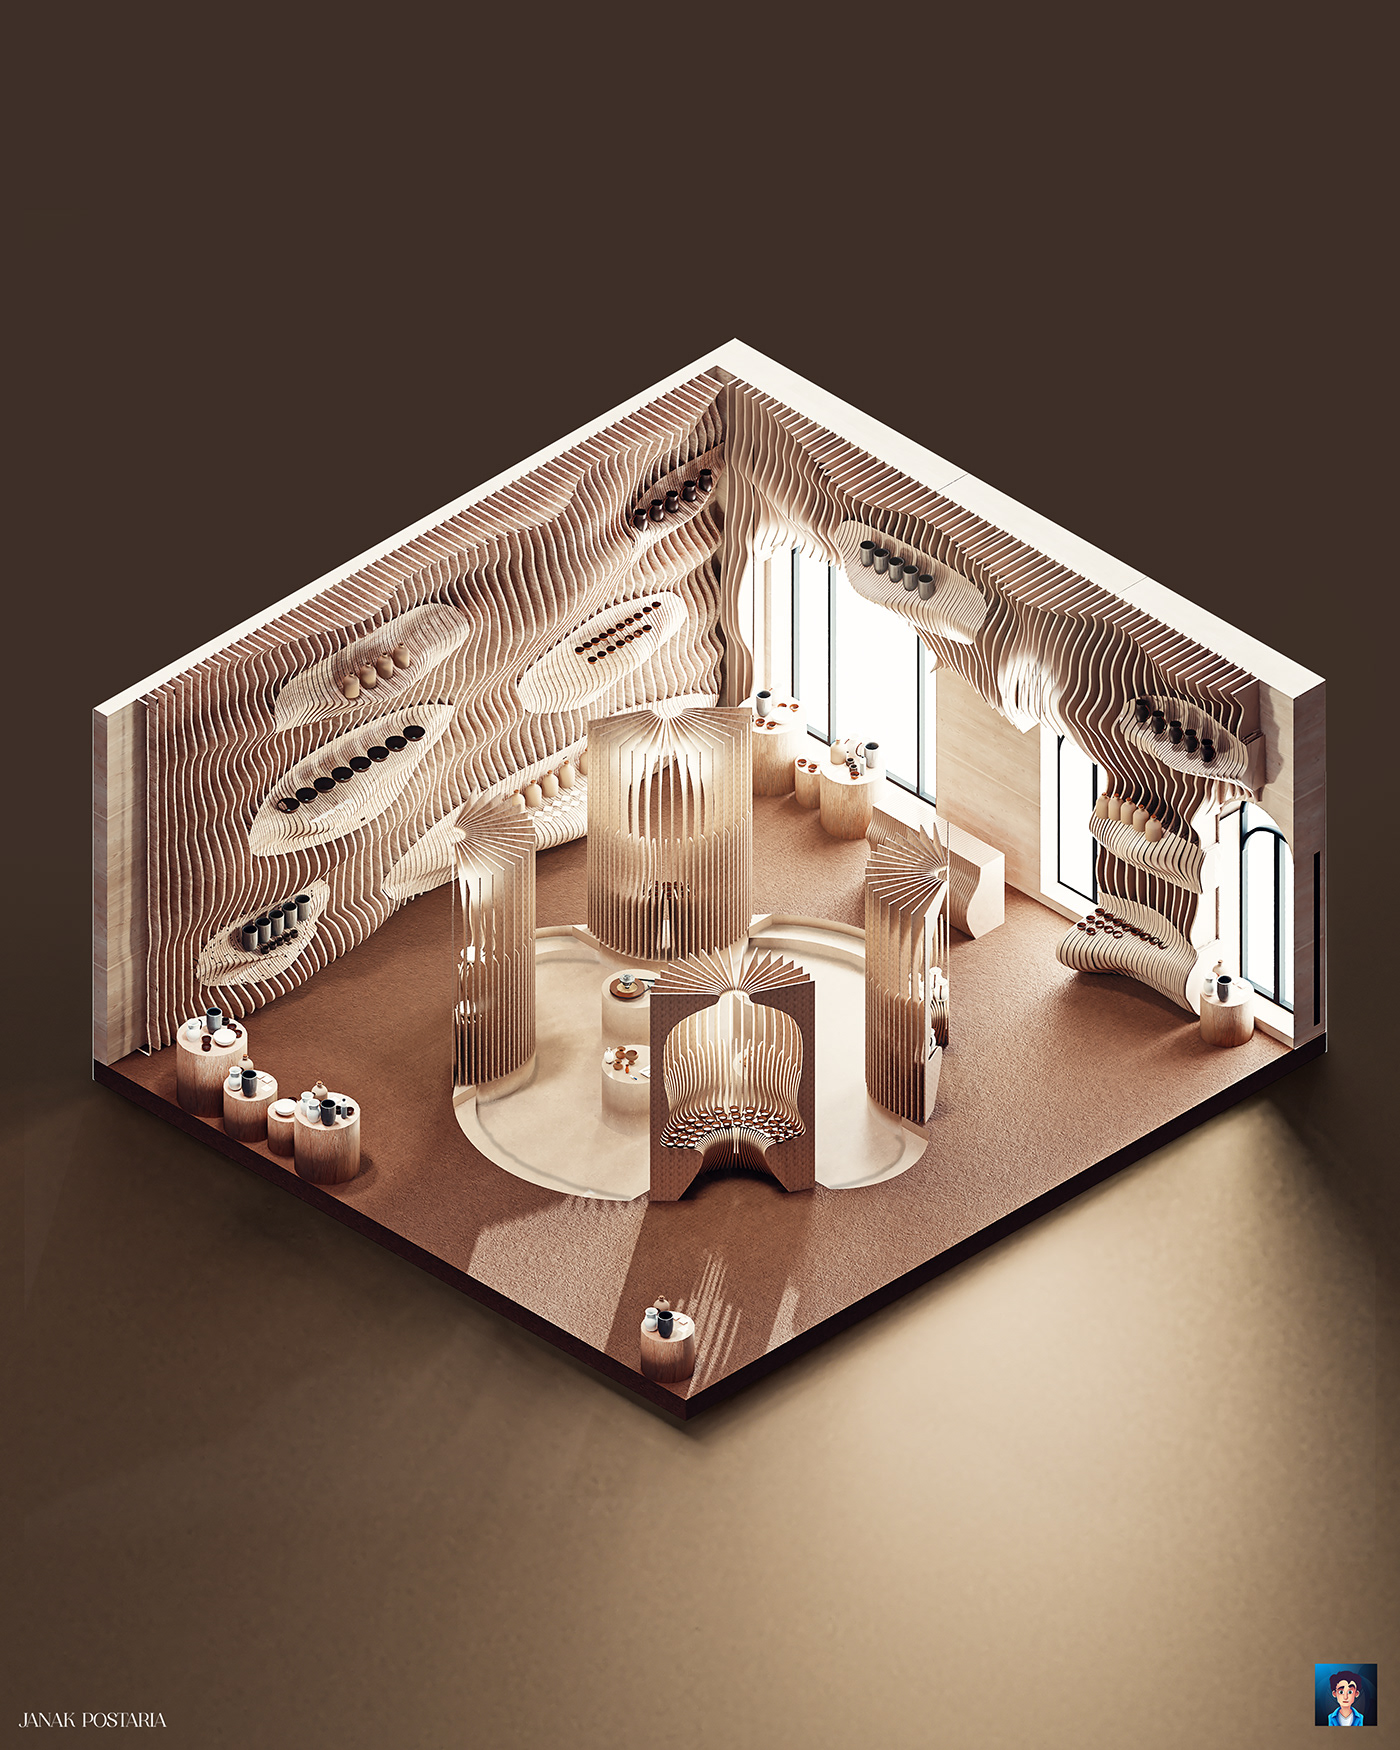 3D 3dmodeling 3dvisualization architecture archviz artwork interior design  Render Retaildesign storedesign